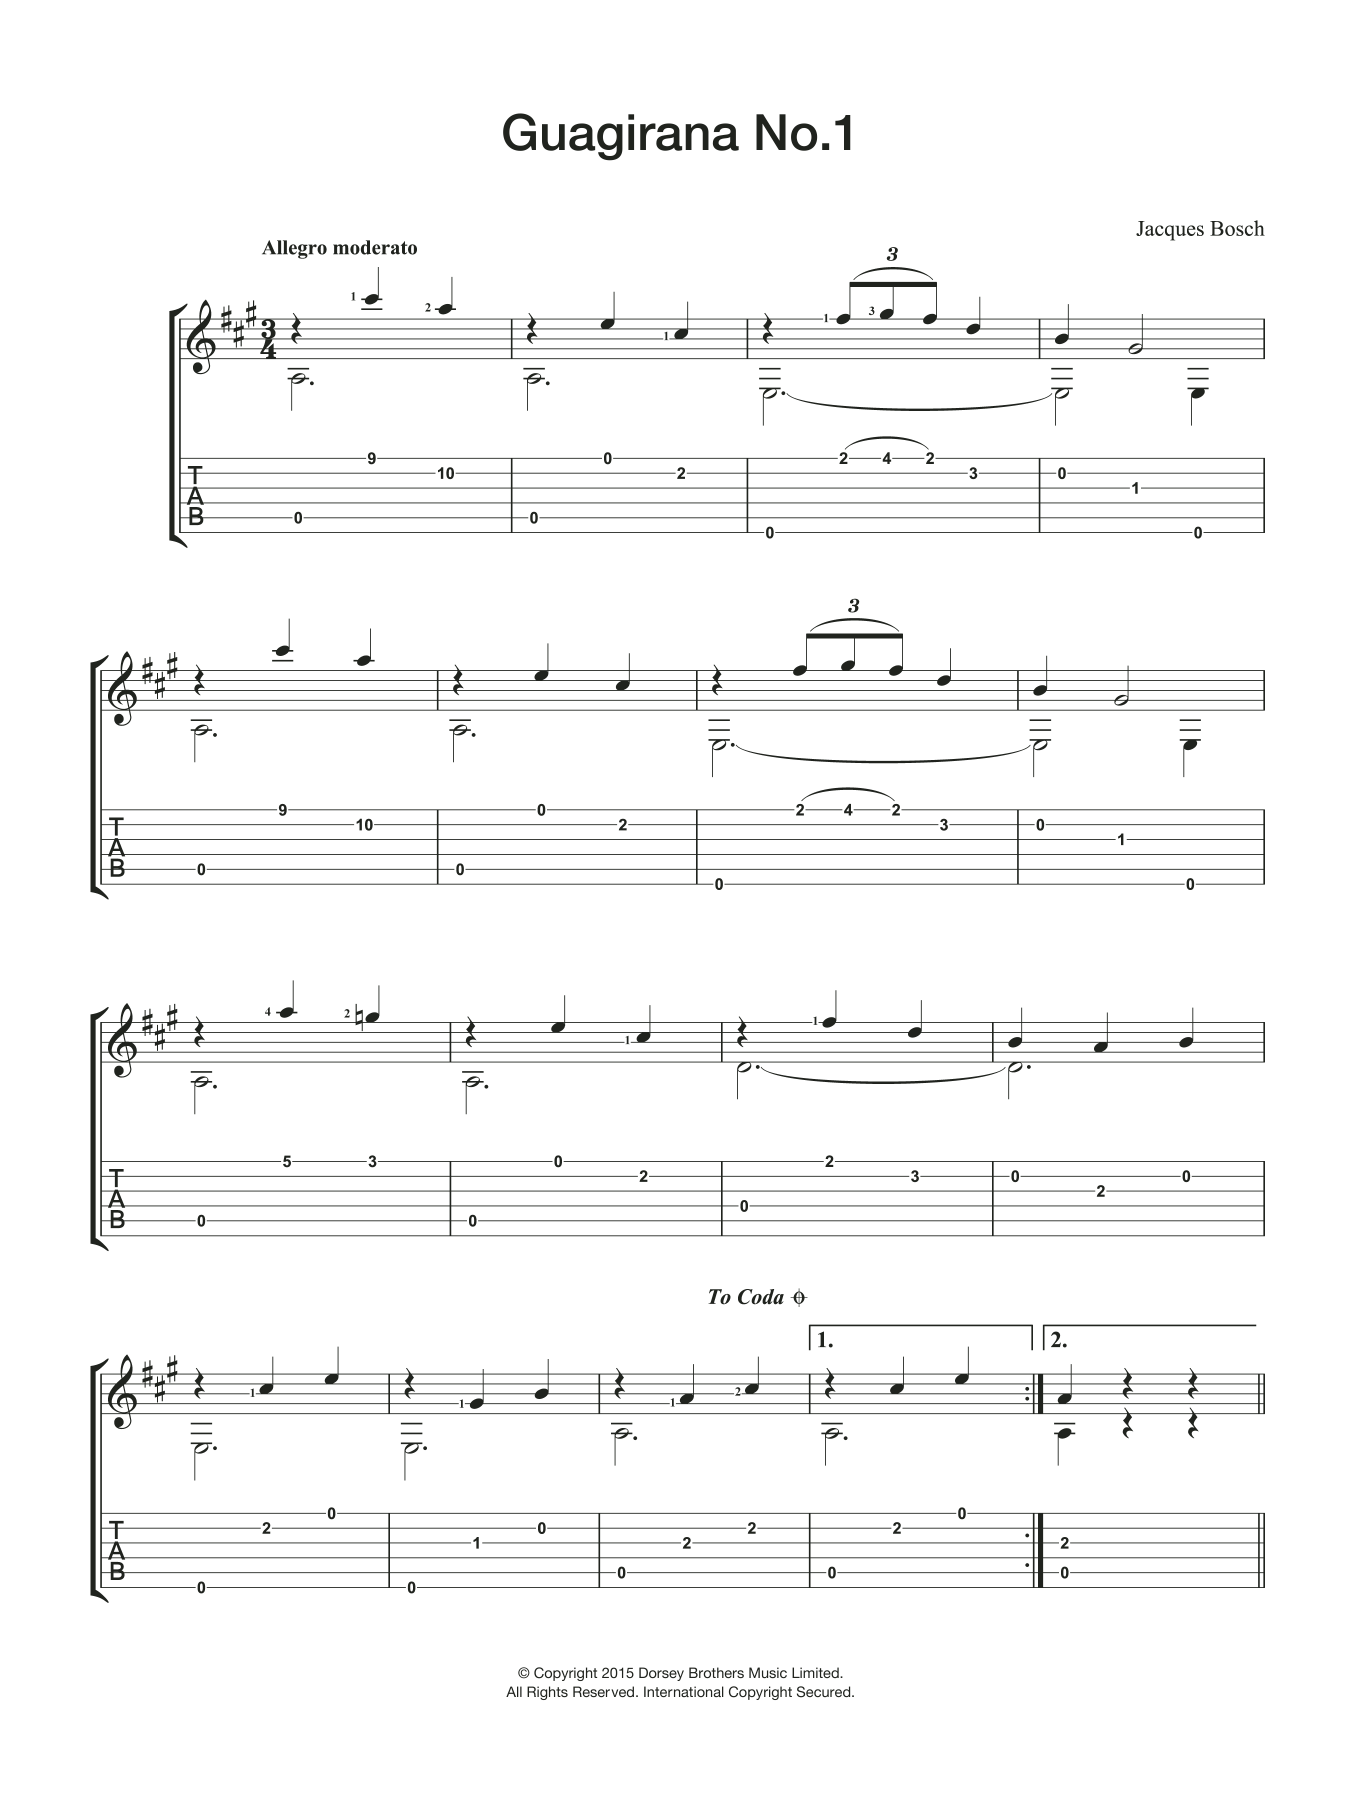 Jacques Bosch Guagirana No. 1 Sheet Music Notes & Chords for Guitar - Download or Print PDF